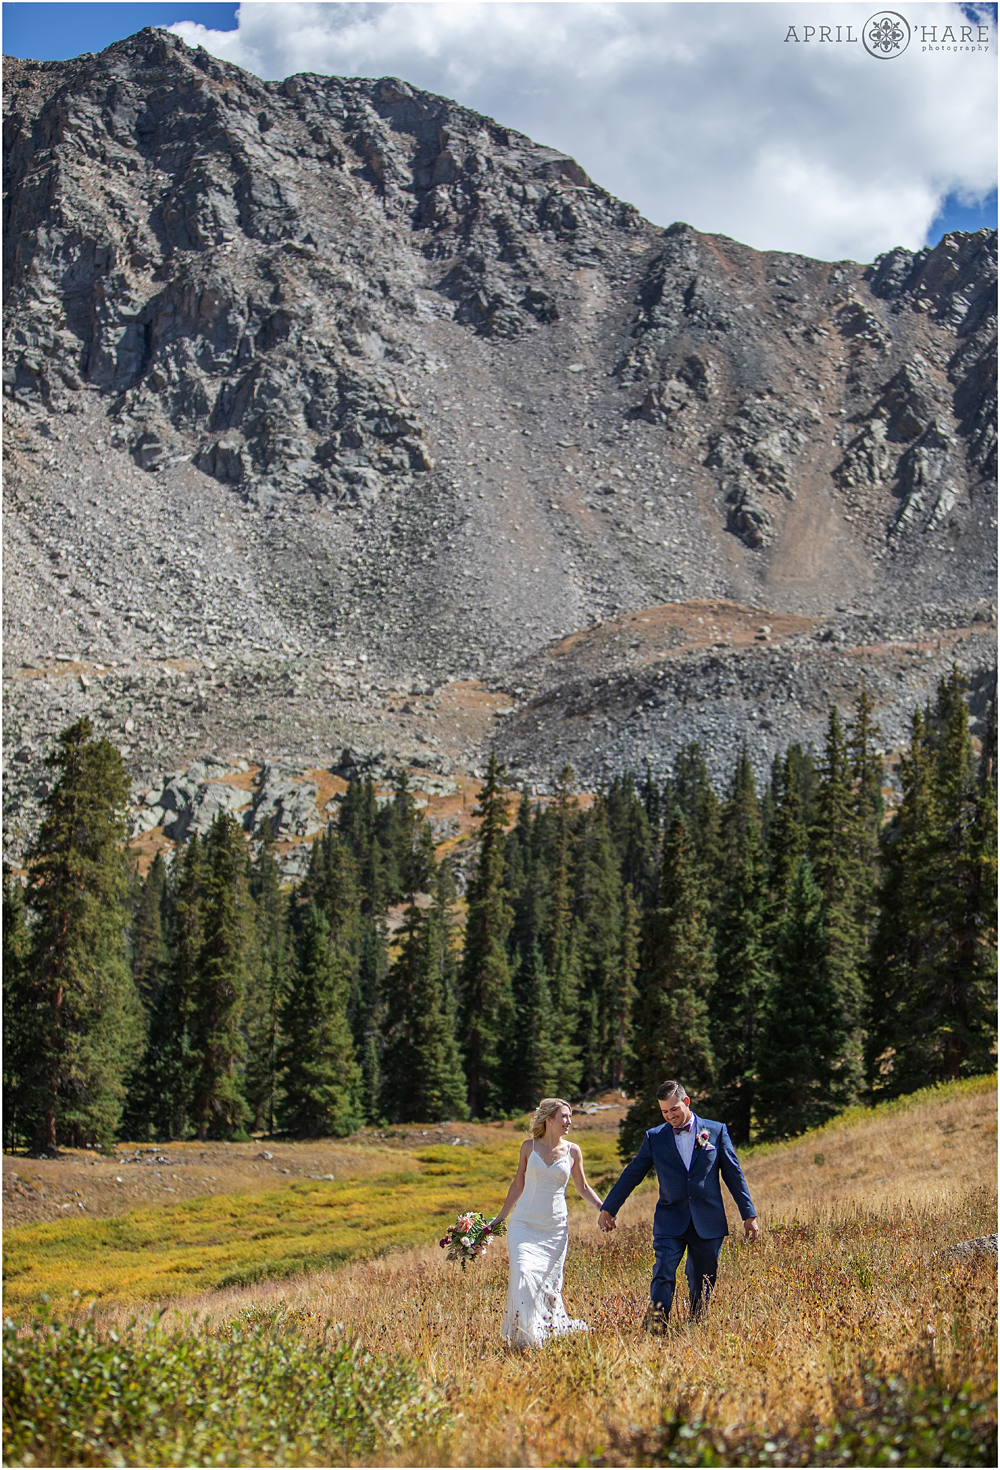 Huge Epic Mountain Backdrop at Arapahoe Basin Ski Resort during Fall Wedding